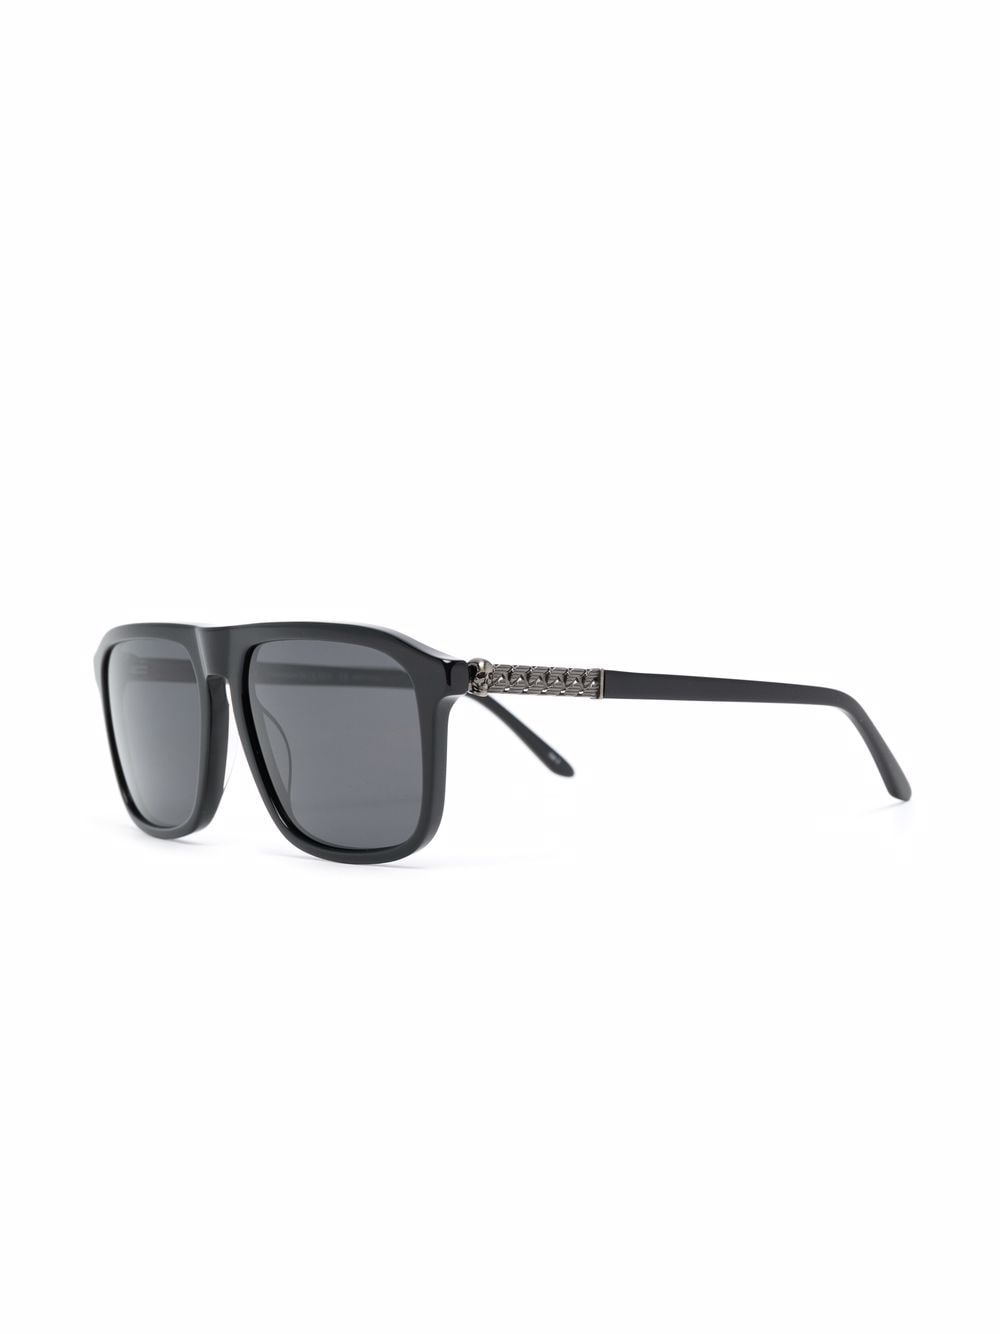 ALEXANDER MCQUEEN Square Sunglasses Black - MAISONDEFASHION.COM